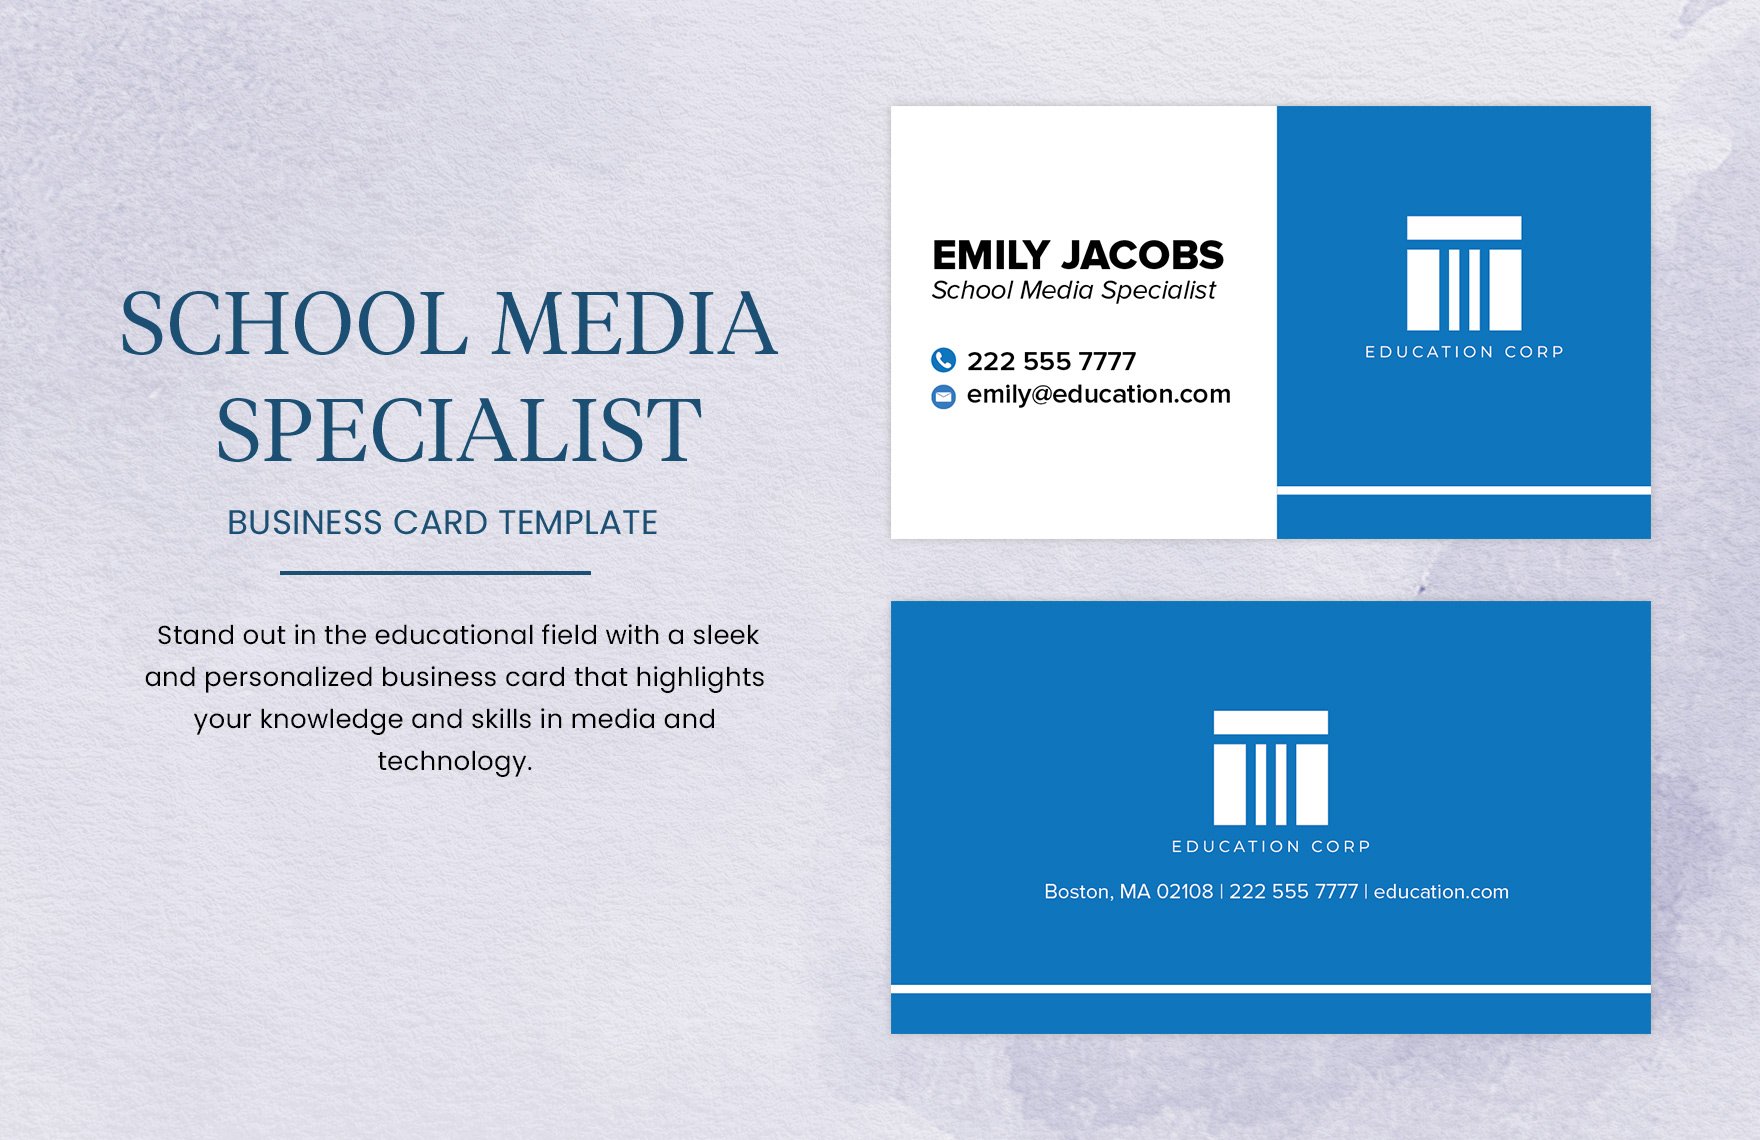 School Media Specialist Business Card Template